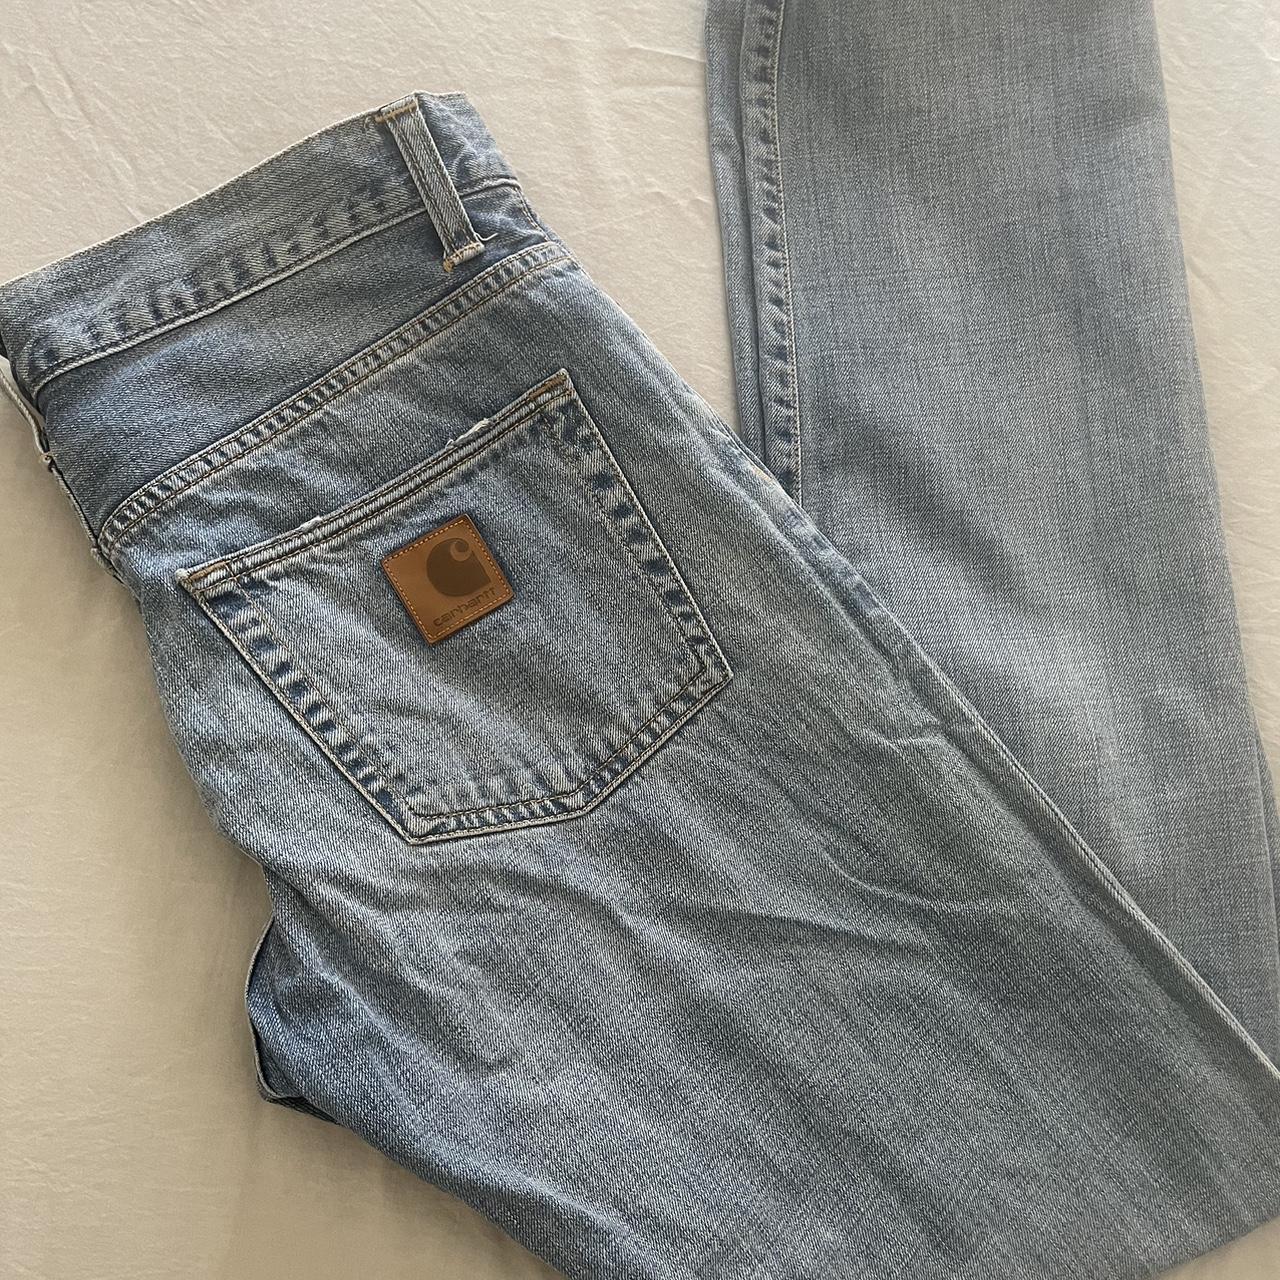 Carhartt WiP jeans - Kinney pant blue #carhartt... - Depop